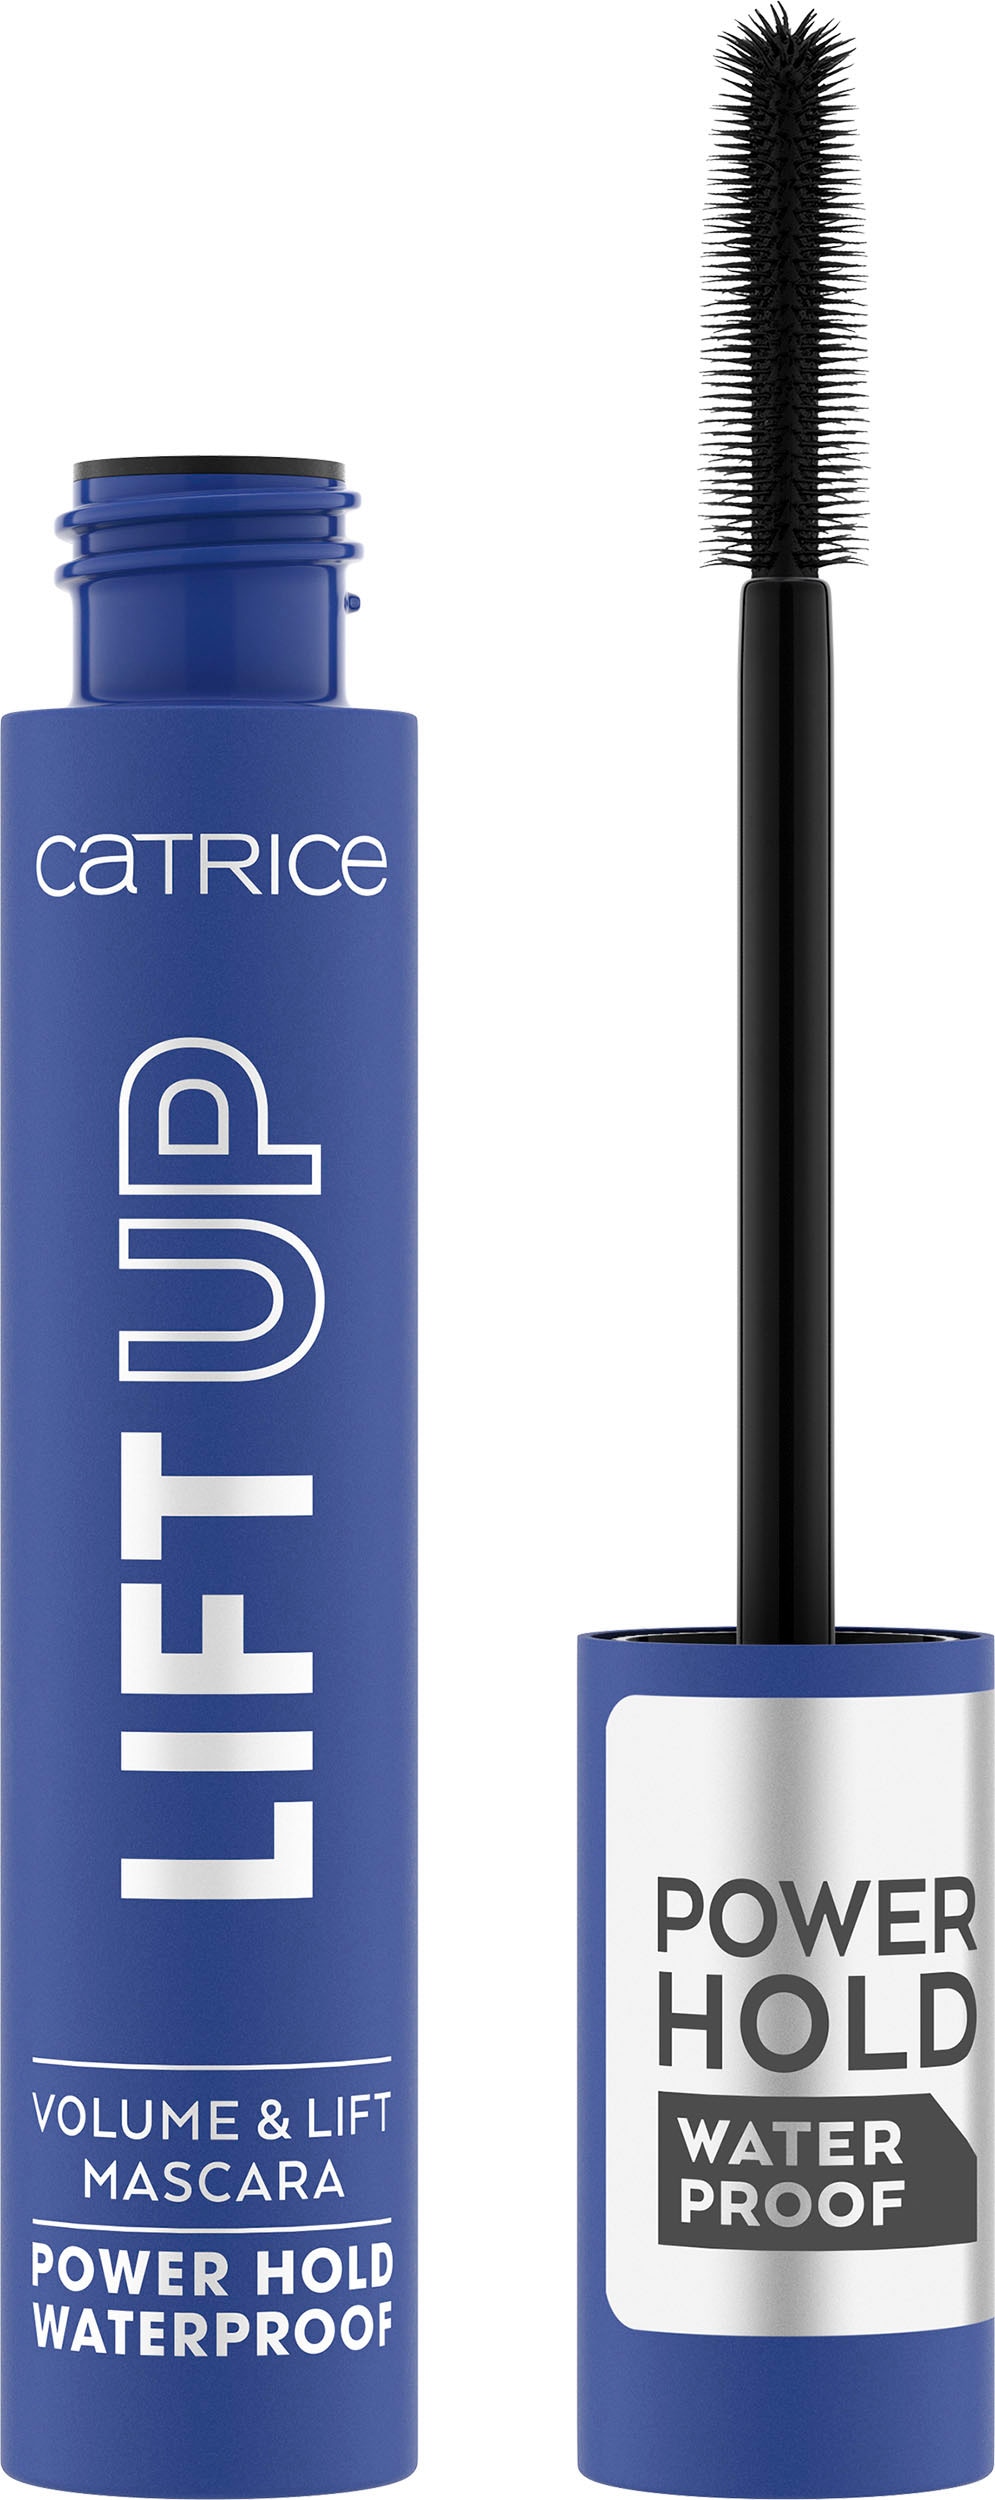 Catrice Mascara »Catrice LIFT UP Volume & Lift Mascara Power Hold  Waterproof 010«, (Set, 3 tlg.) im Online-Shop kaufen